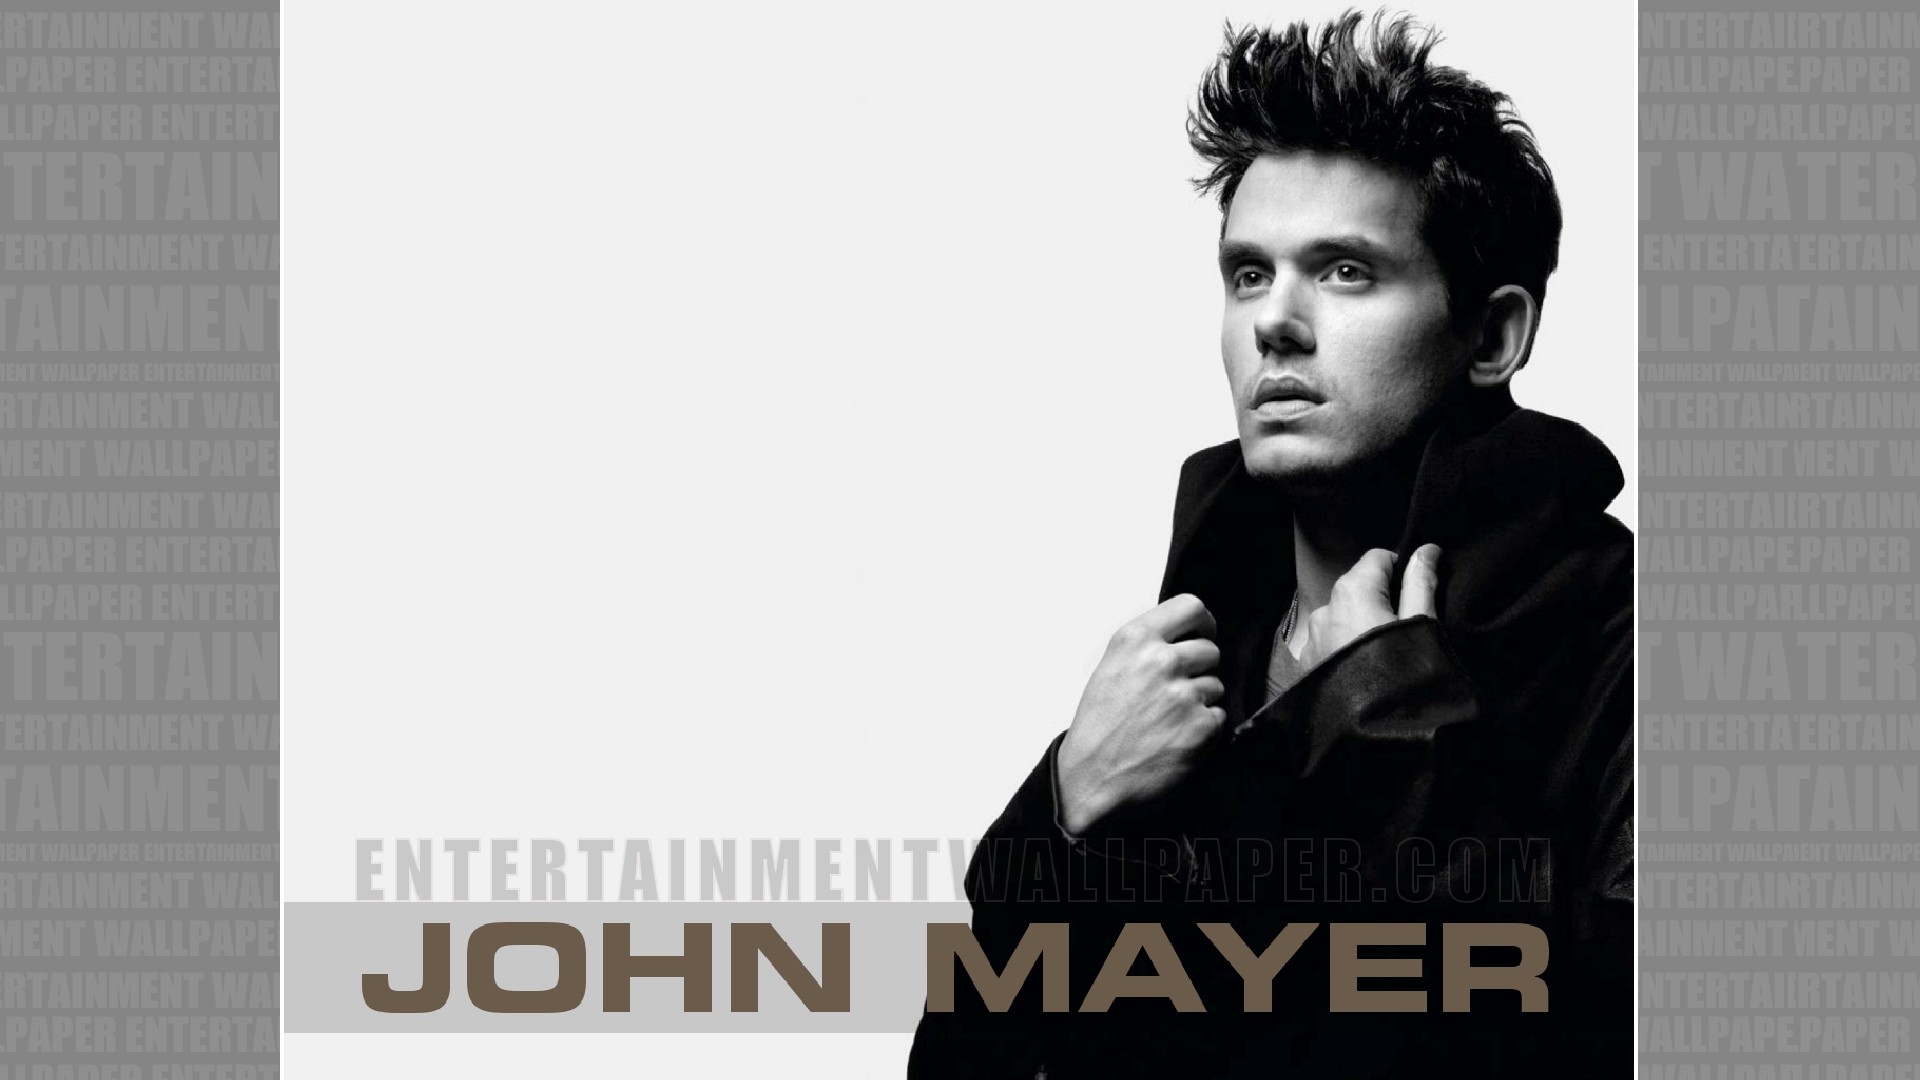 John Mayer Wallpaper Desktop